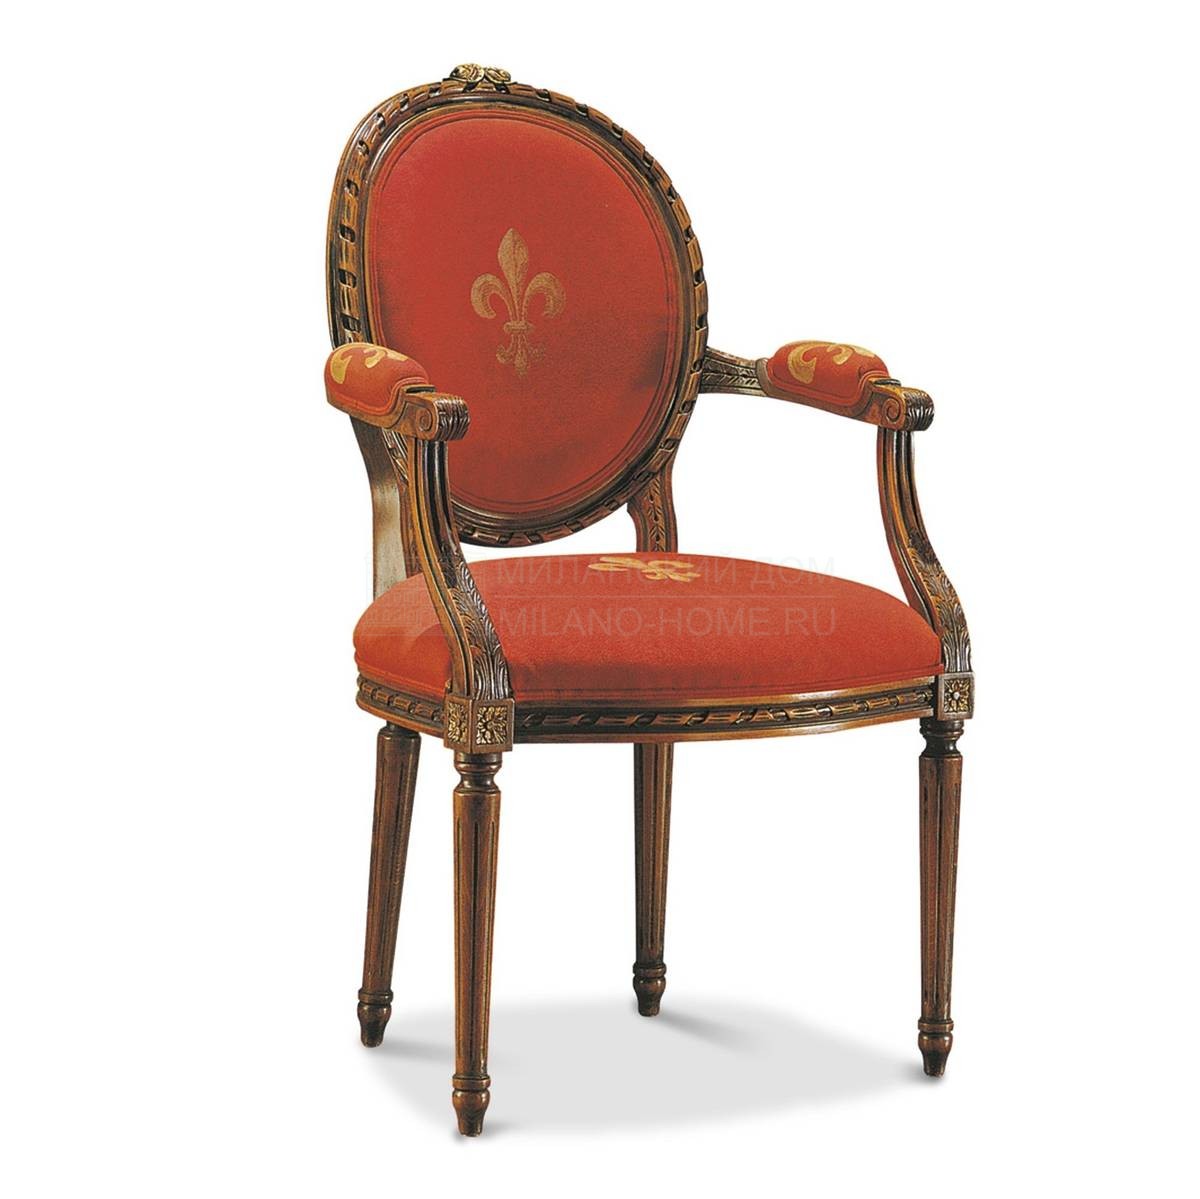 Кресло The Upholstery/P6 из Италии фабрики FRANCESCO MOLON